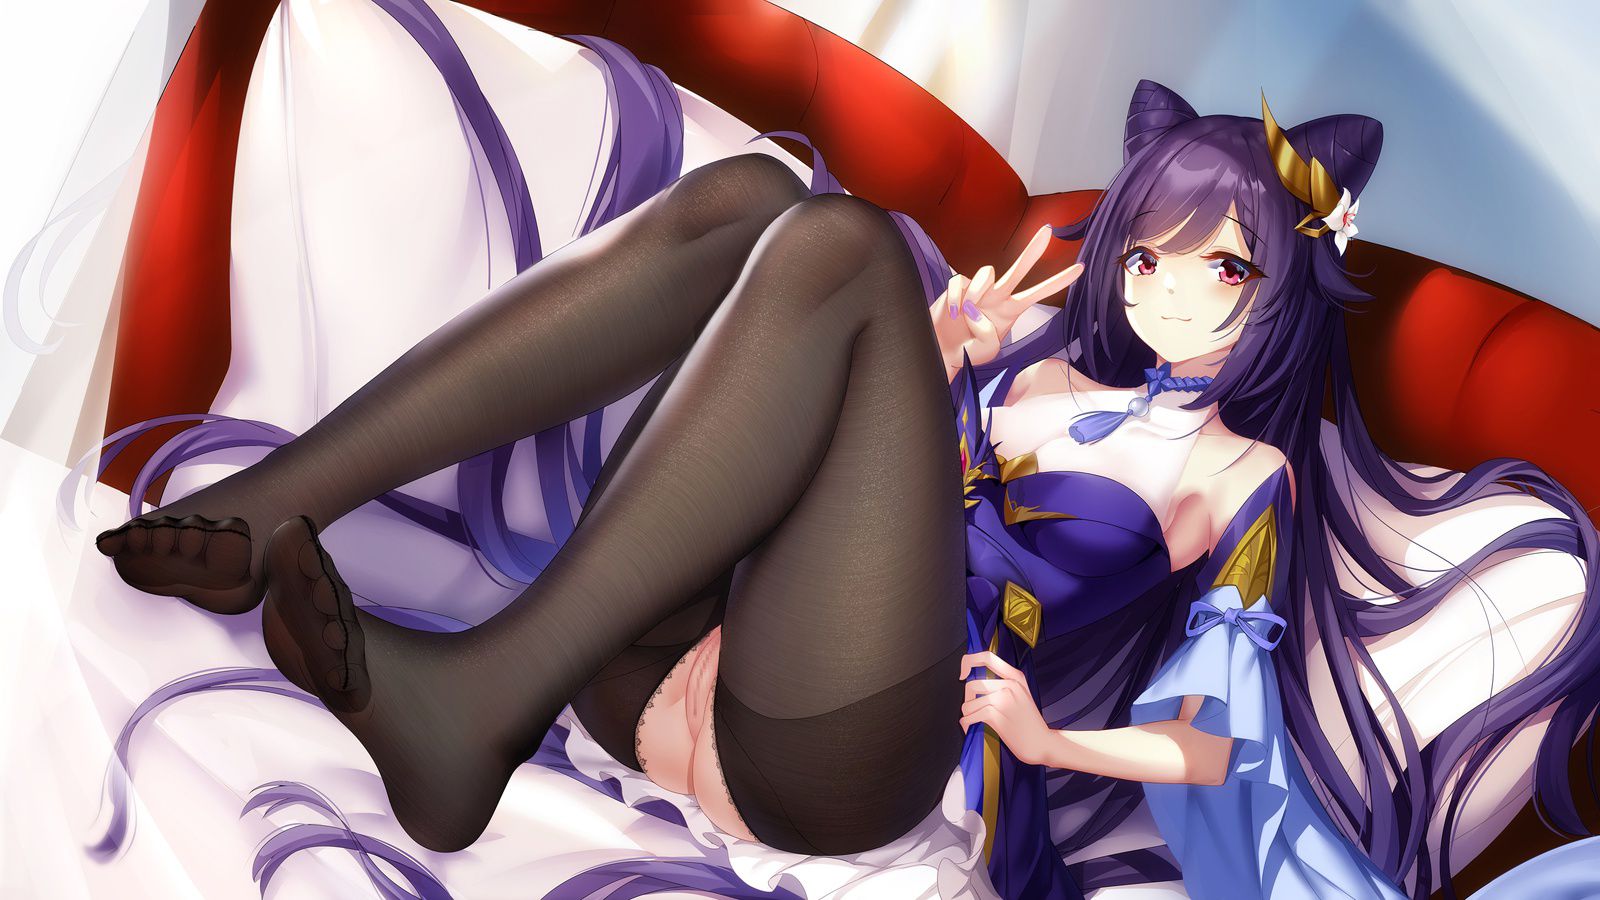 [Haragami] black stockings is erotic Tokiharu-chan's image! Part 2 26